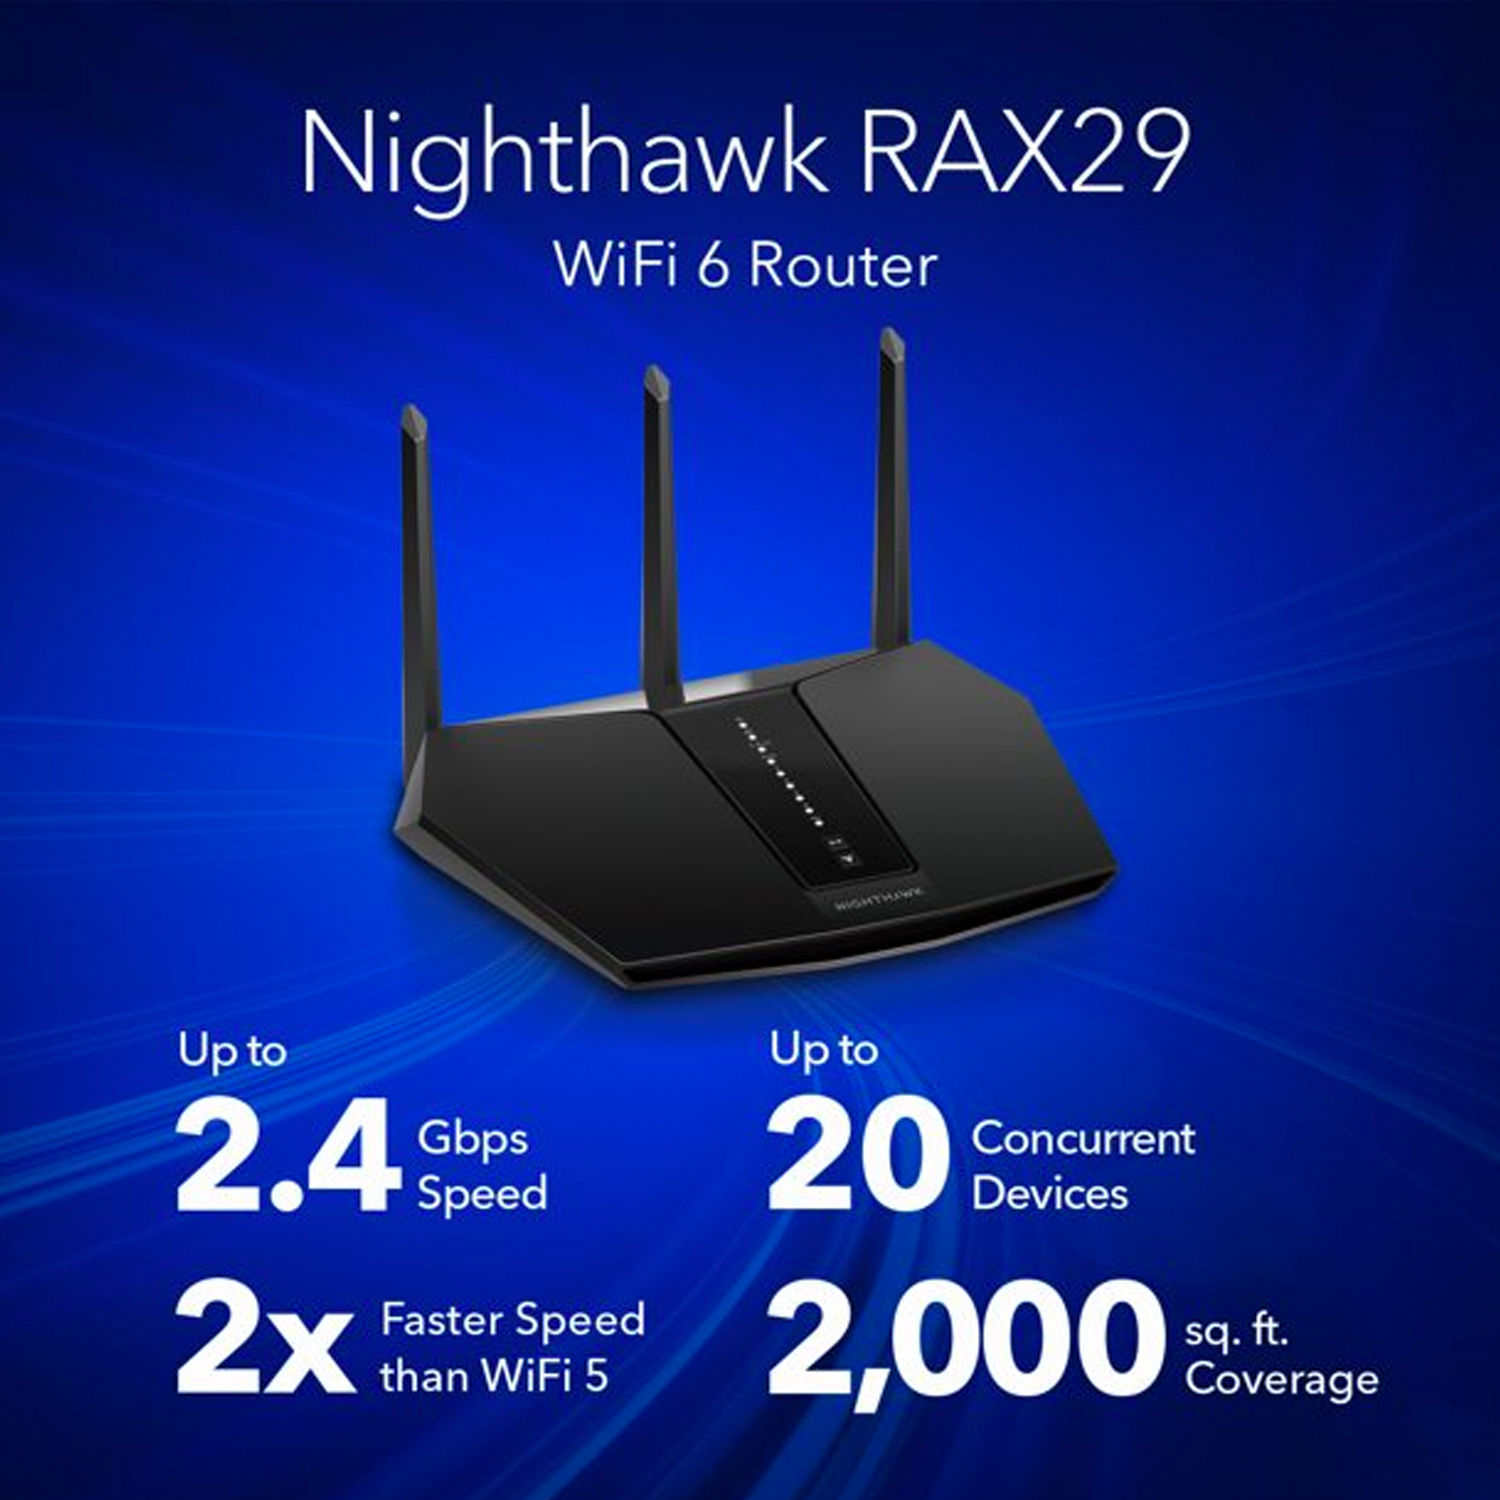 NETGEAR - Nighthawk AX2400 WiFi 6 Router, 2.4Gbps (RAX29) - image 2 of 6